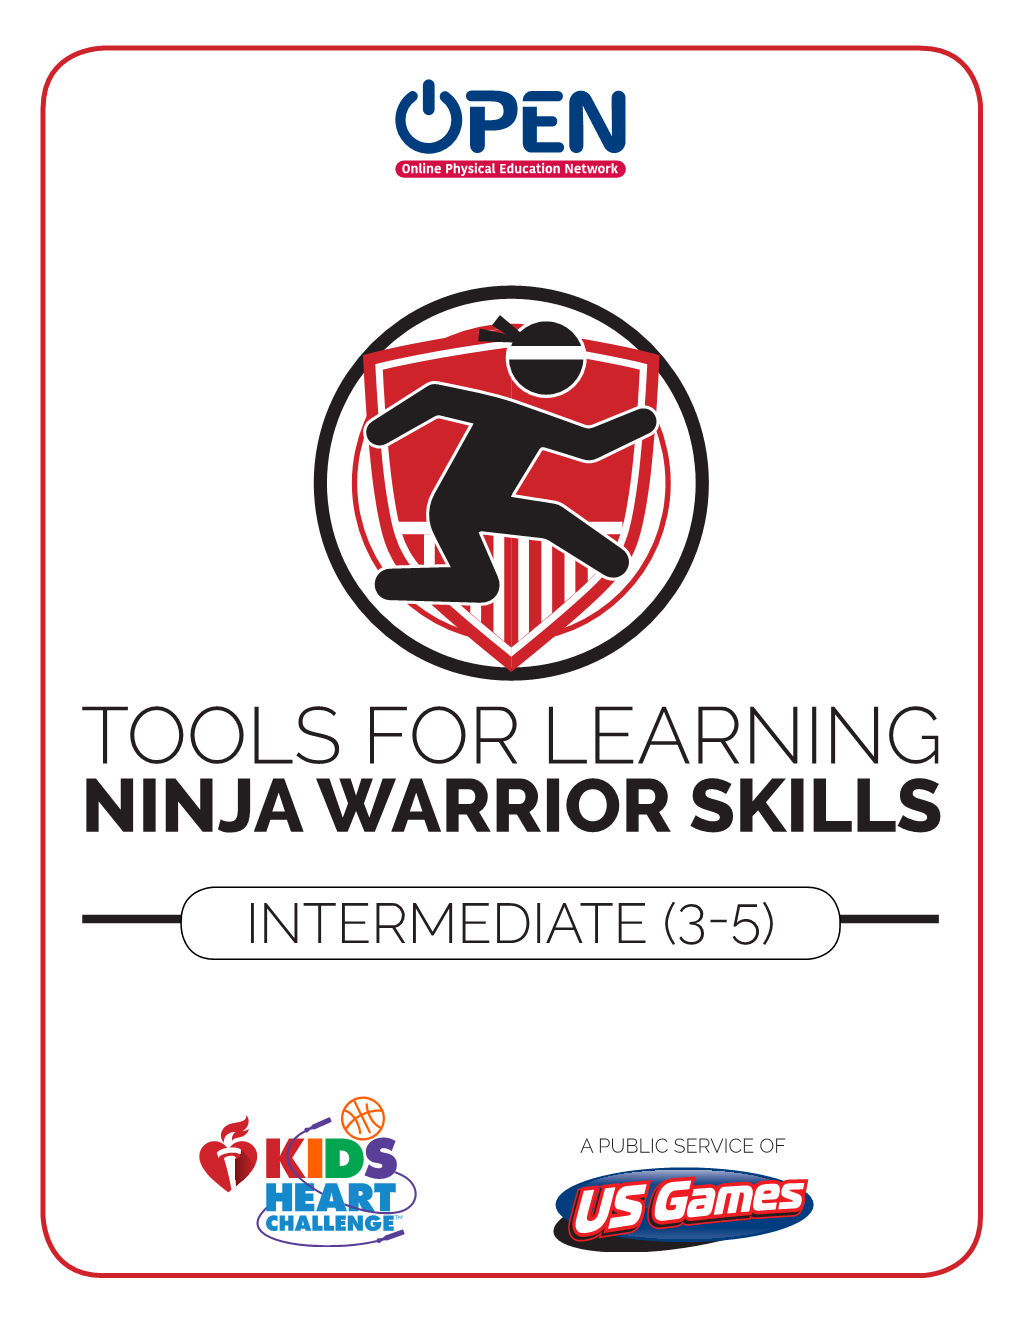 Ninja Warrior Skills Intermediate (3-5)